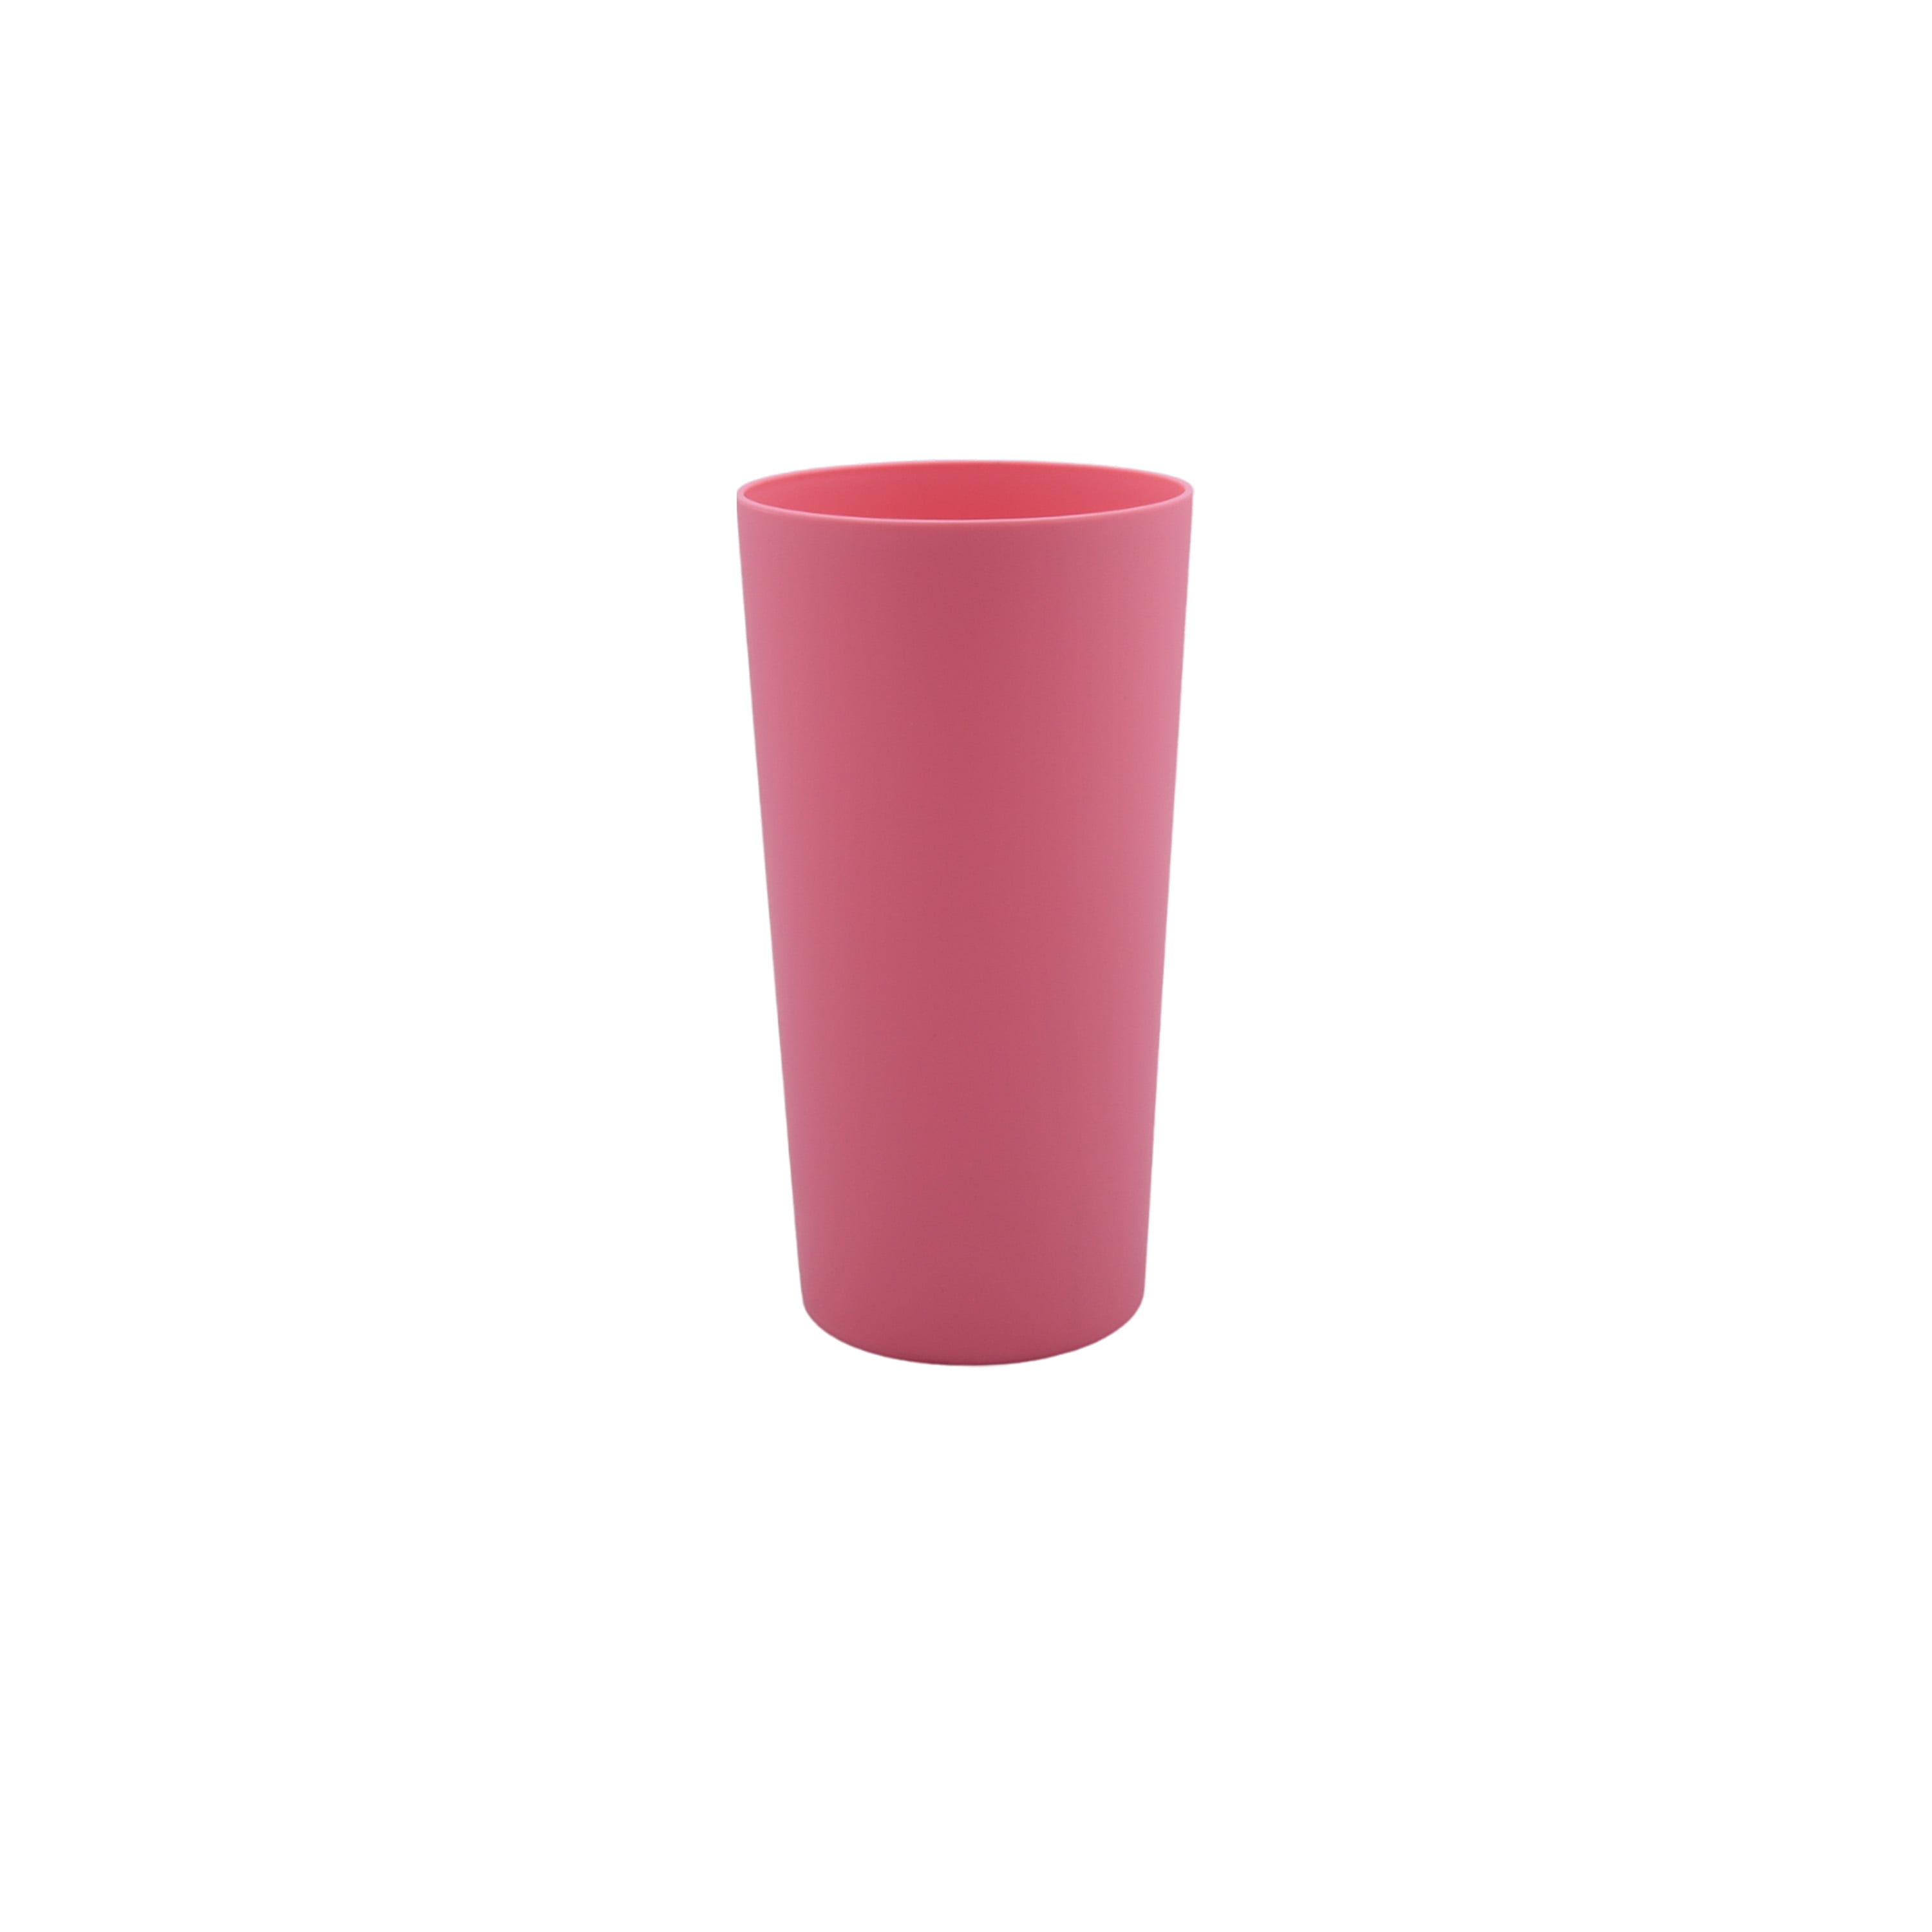 Mainstays Plastic 26 Oz Tumbler Cup Red BPA Free Set of 4